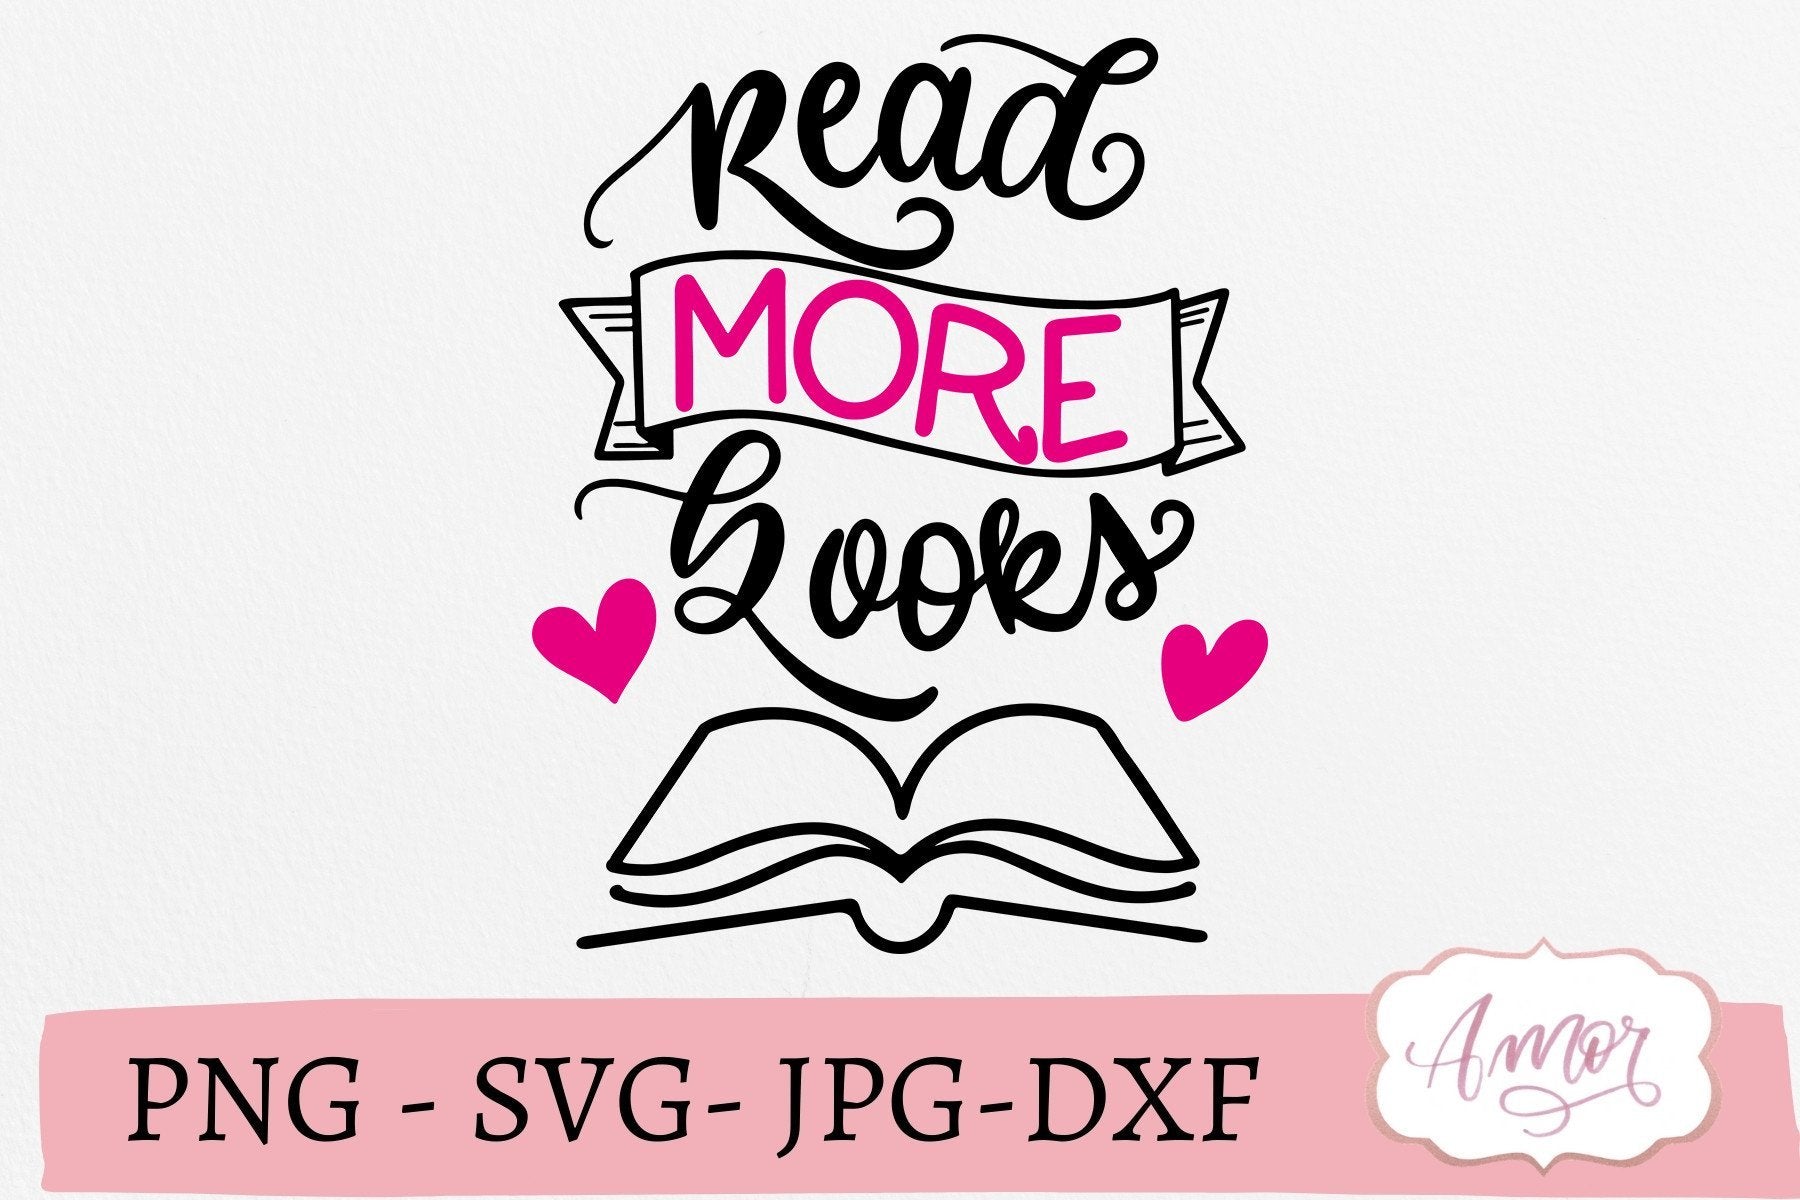 Read more books SVG, book lover svg - So Fontsy